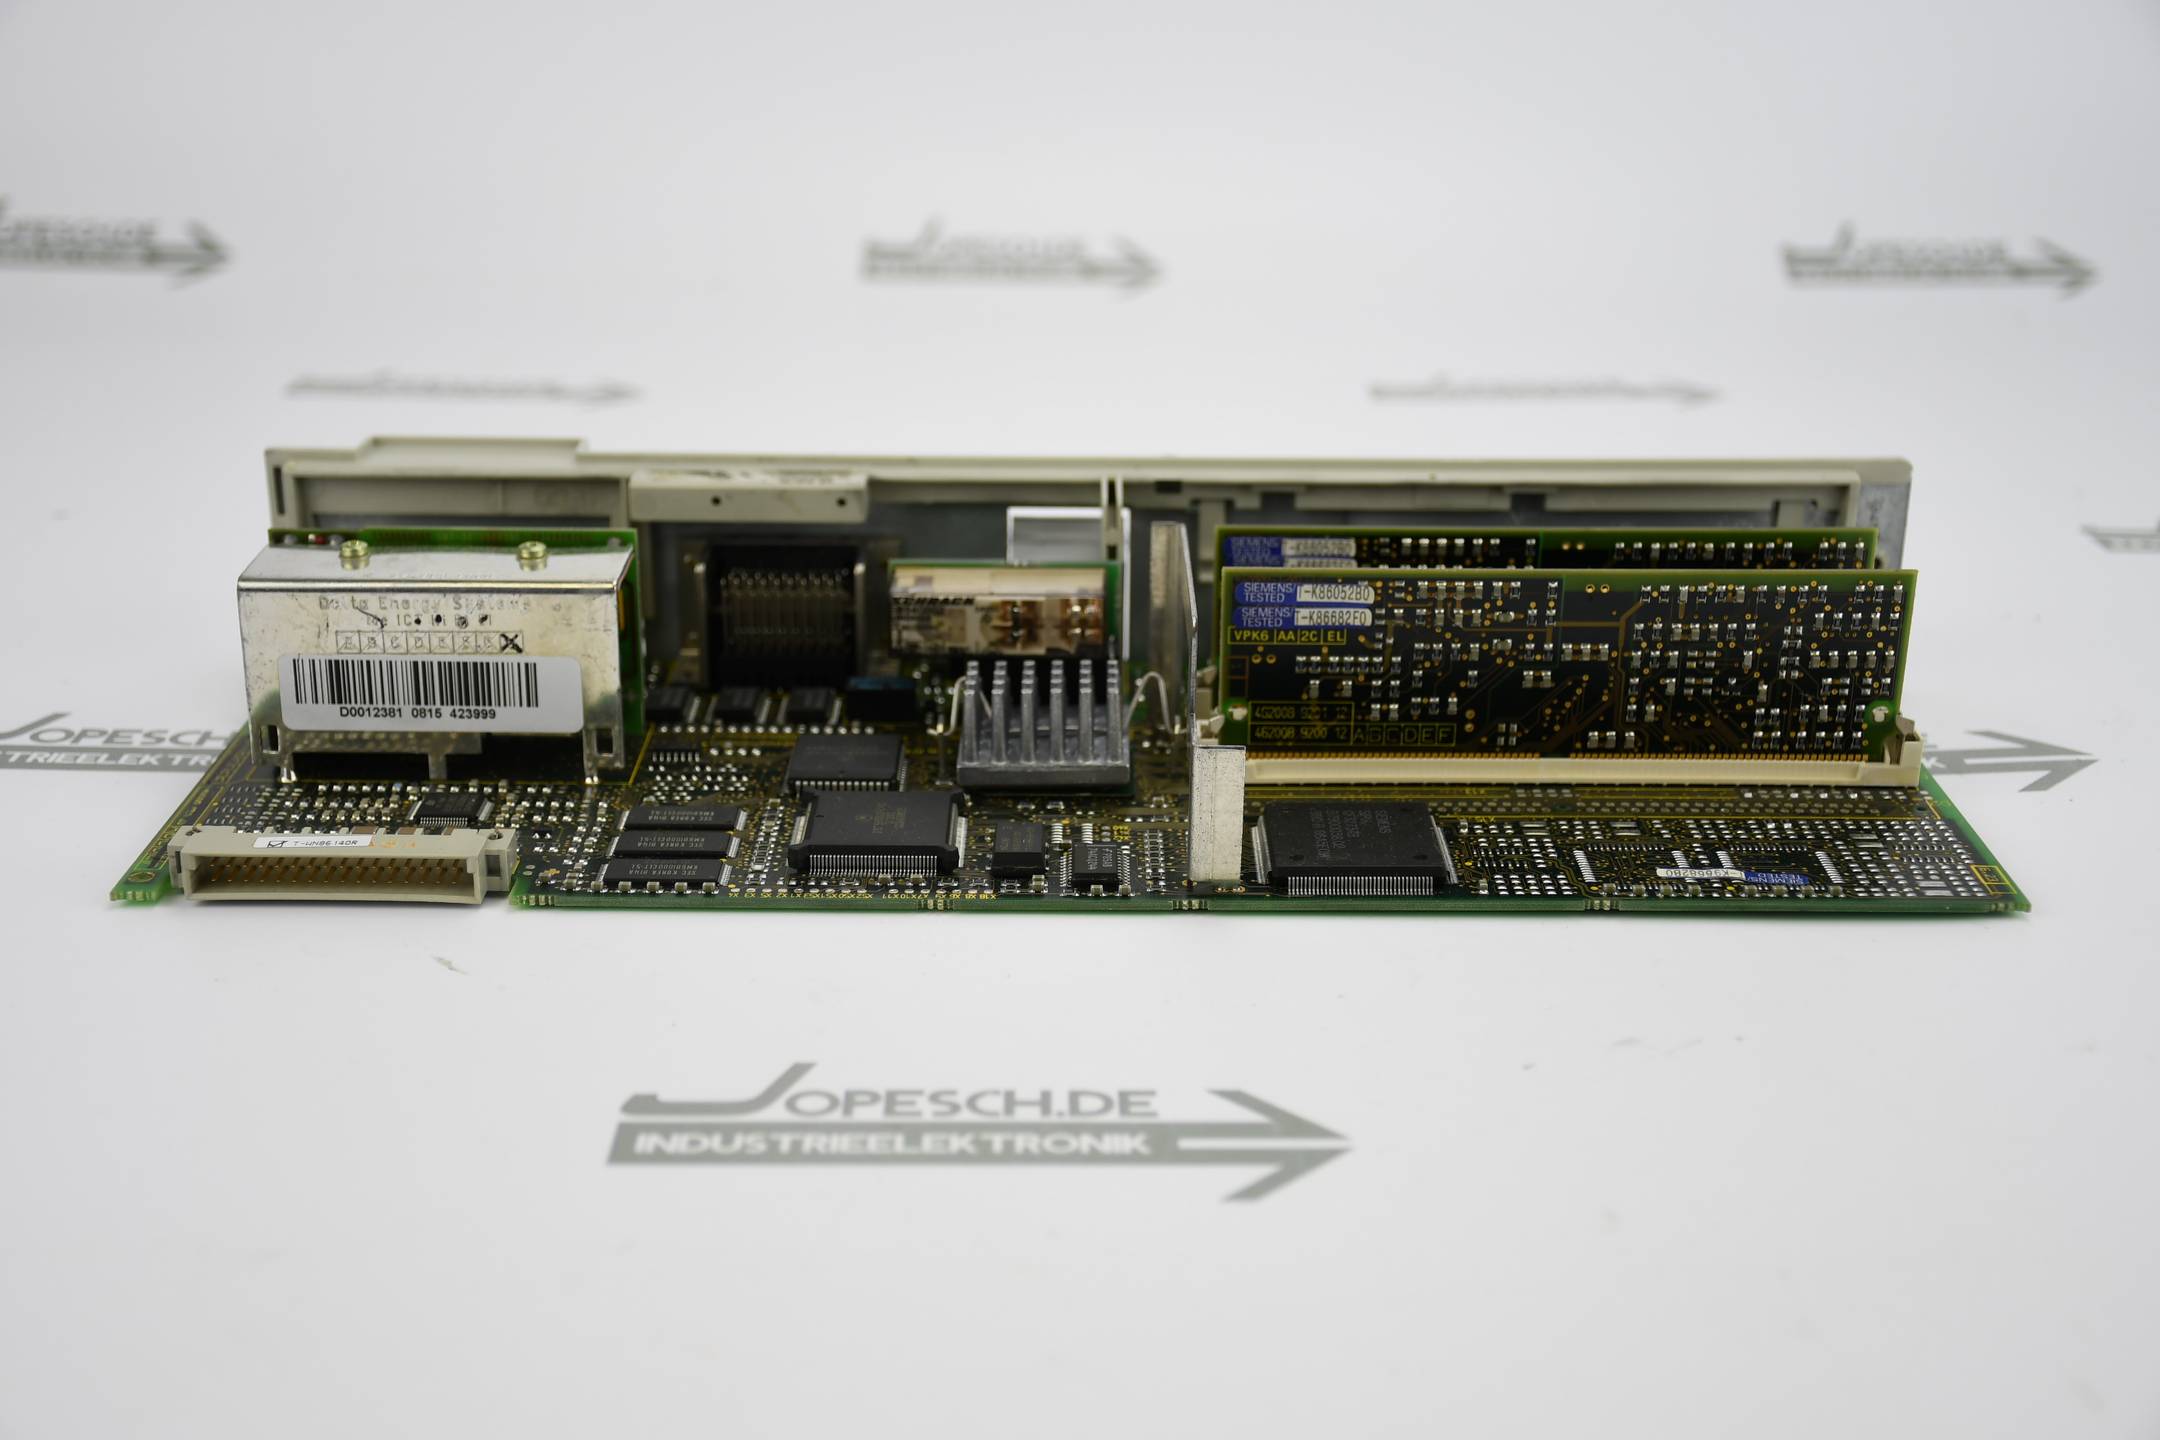 Siemens simodrive 611-D Regeleinschub 6SN1 118-0DG23-0AA0 ( 6SN1118-0DG23-0AA0 )